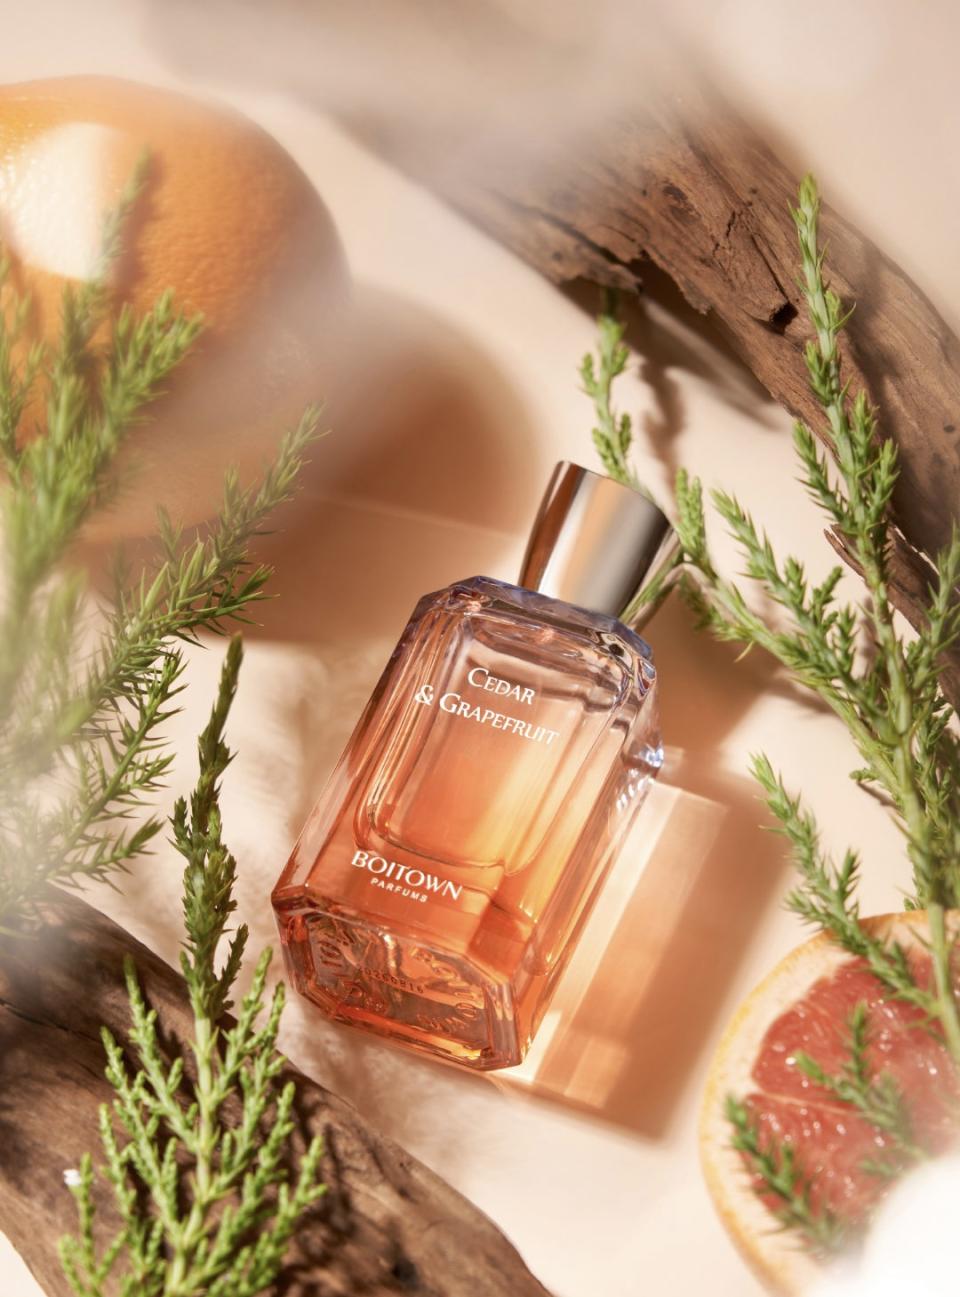 Boitown’s Cedar and Grapefruit fragrance. - Credit: Courtesy of Boitown